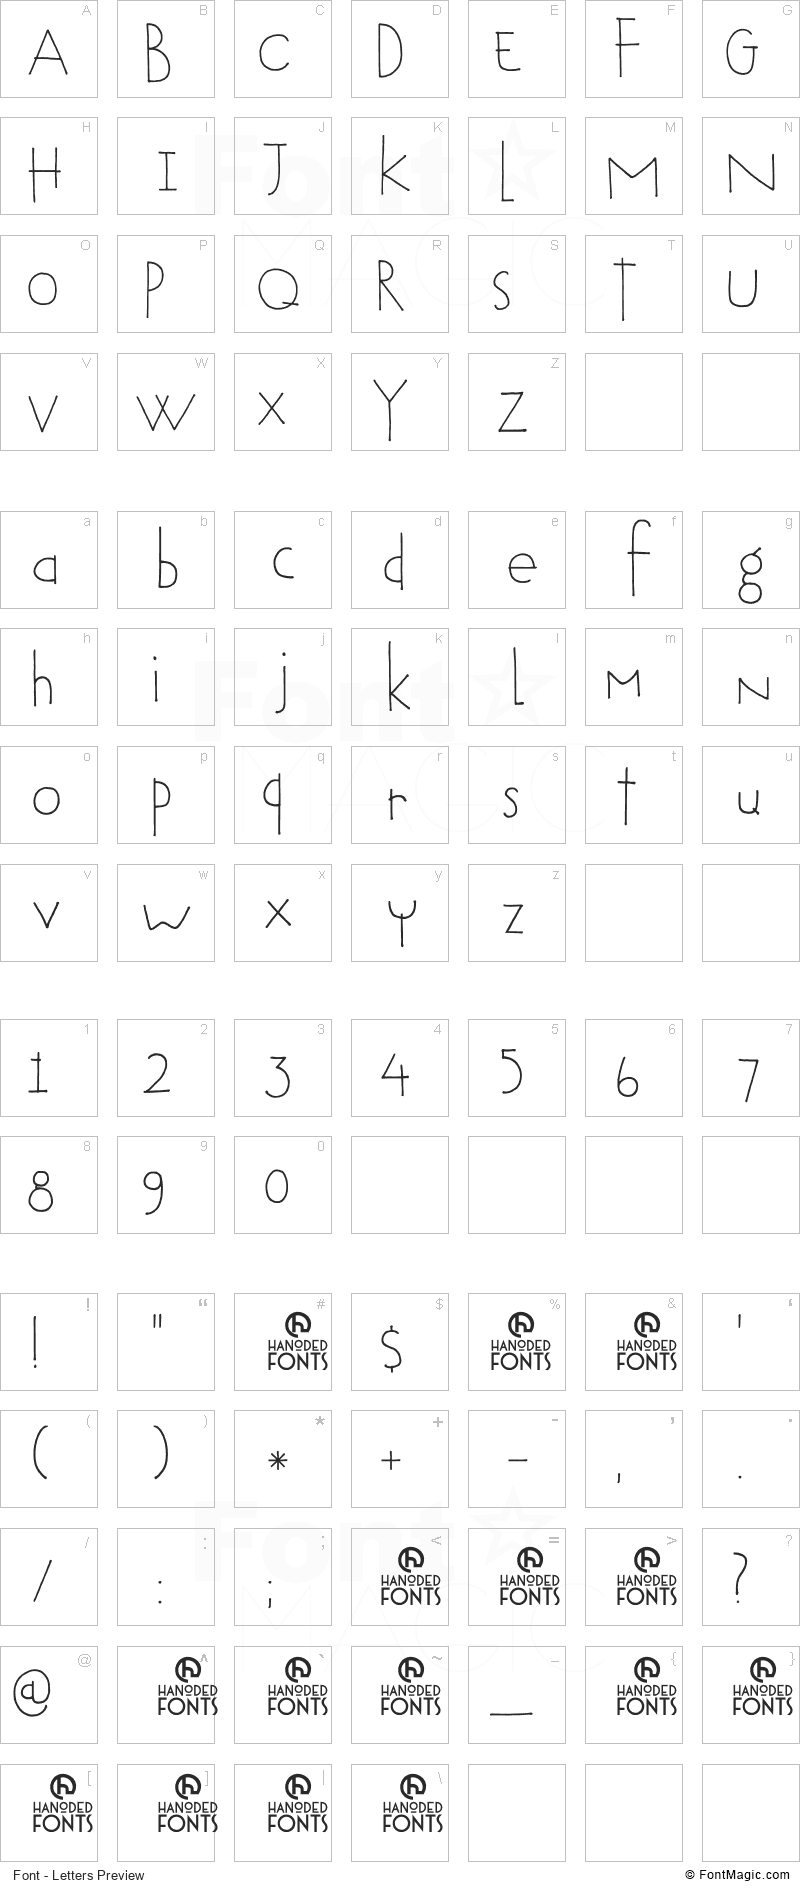 DK Tobu Font - All Latters Preview Chart